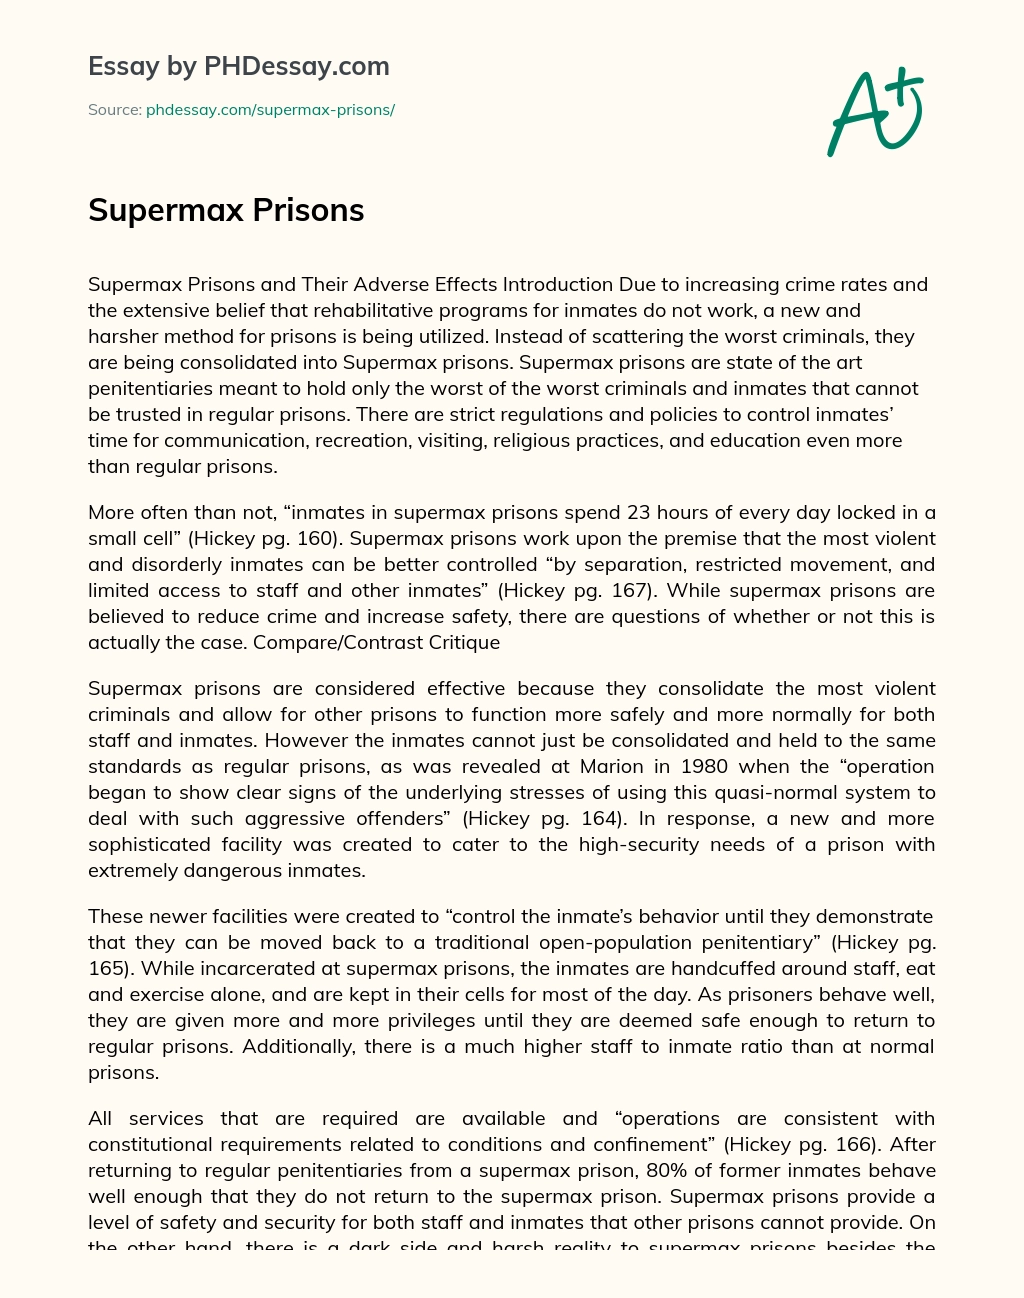 Supermax Prisons essay